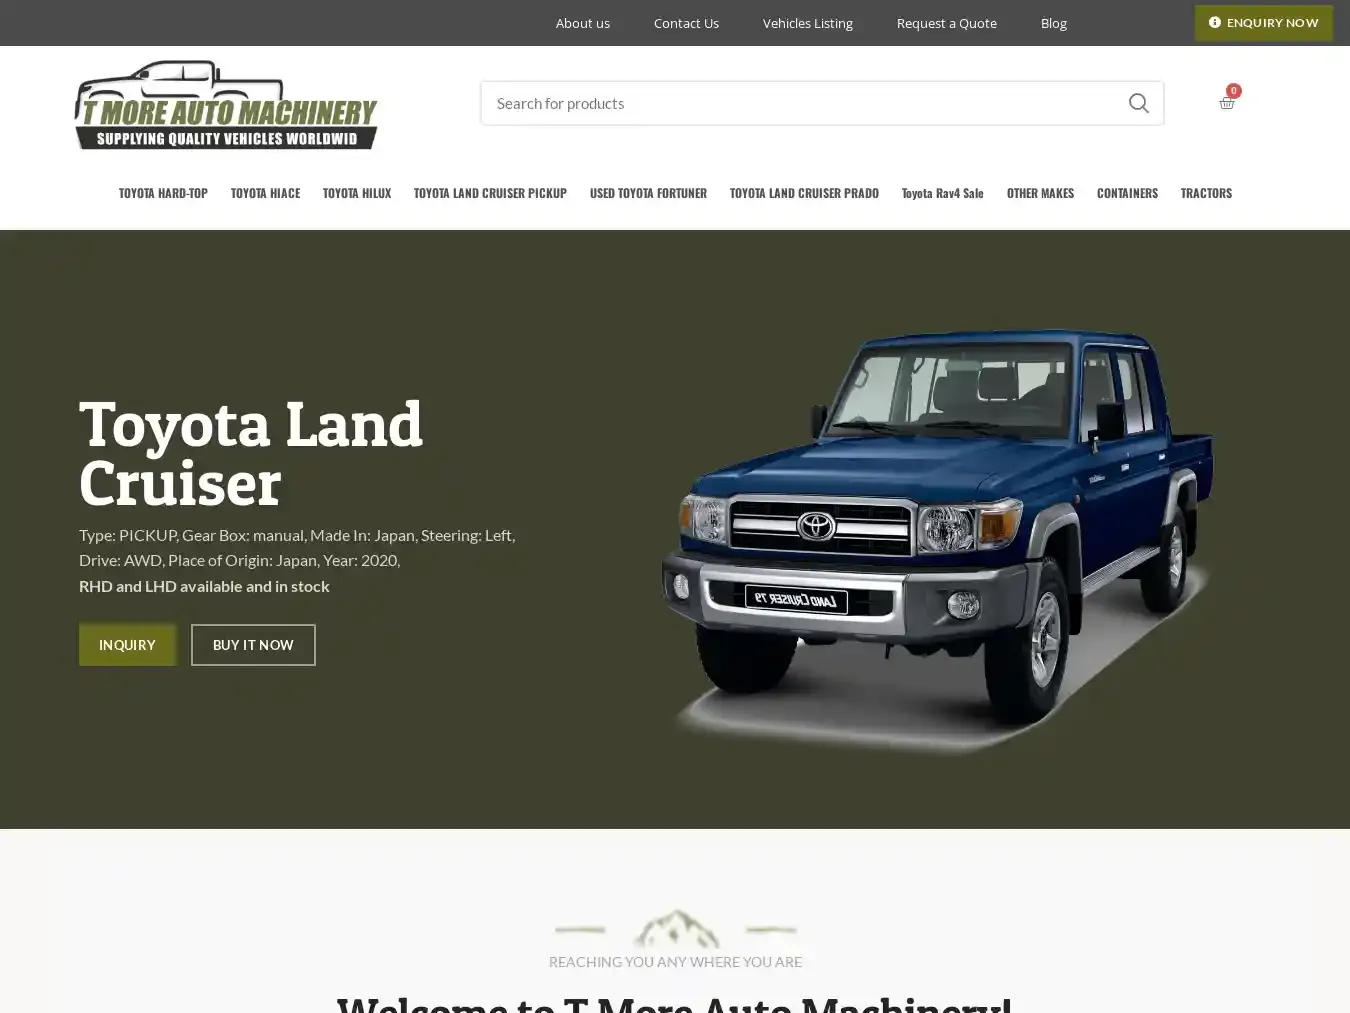 Tmoreautomachinery.com Fraudulent Automobile website.